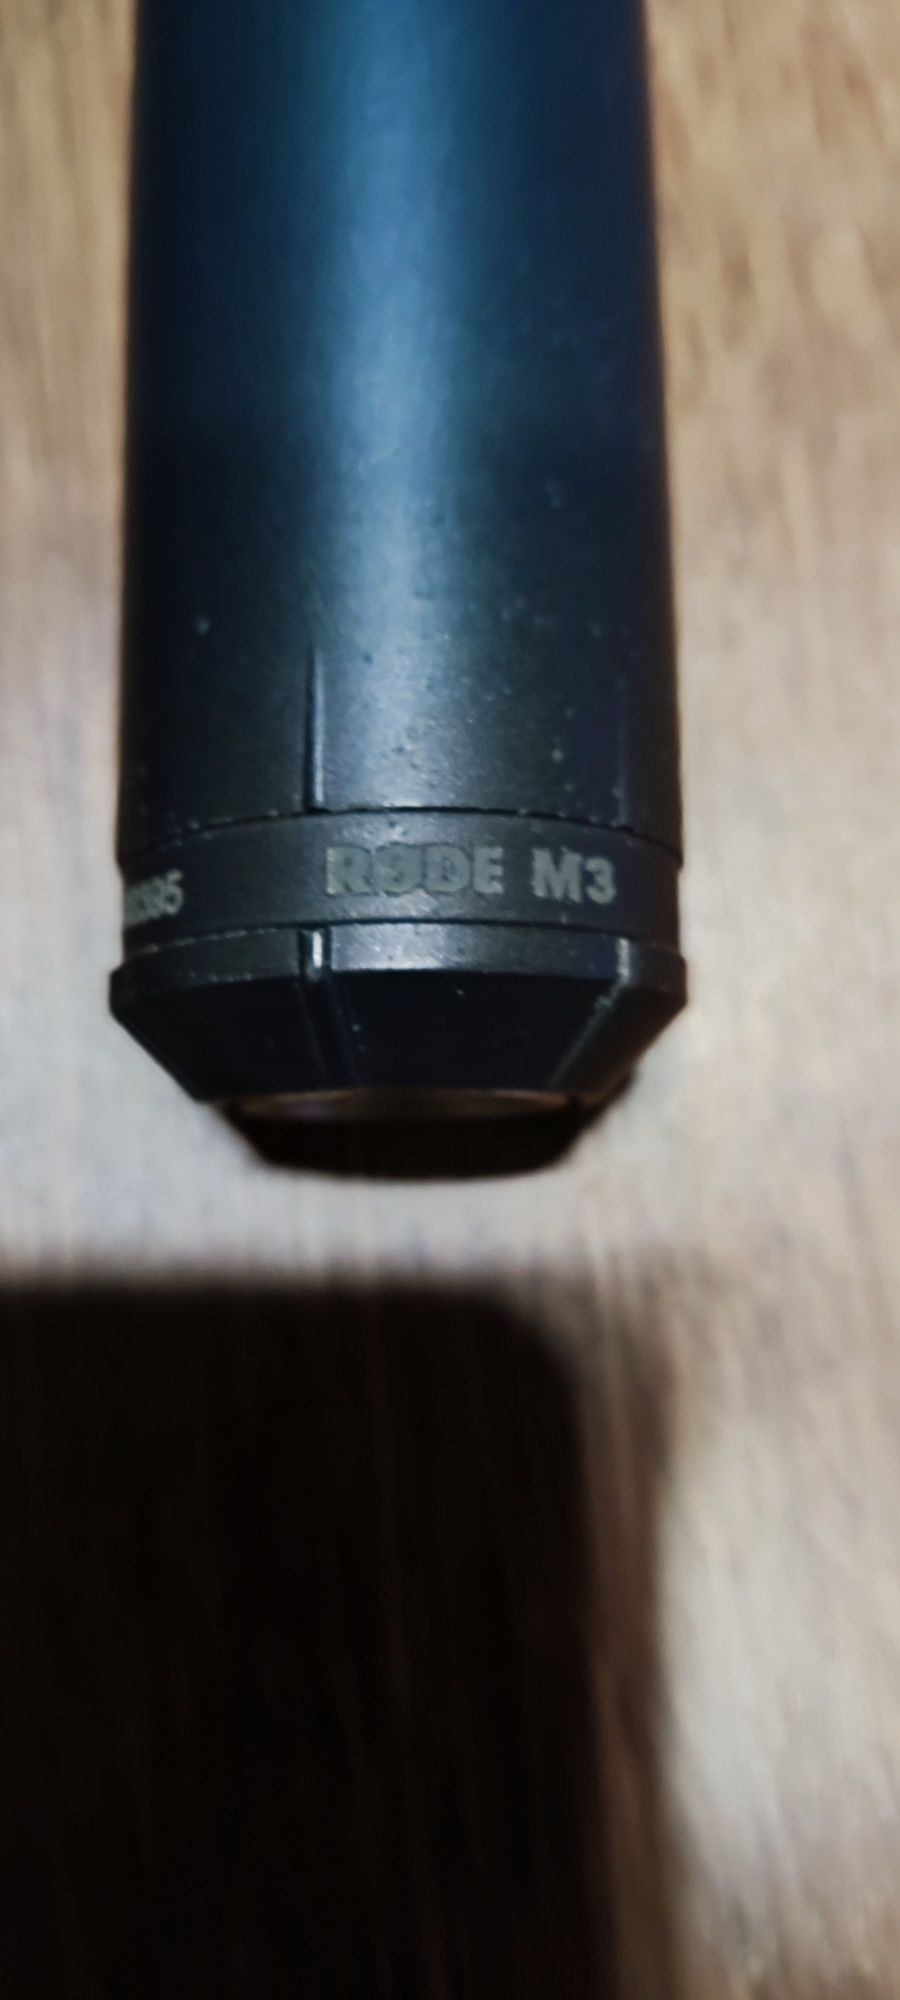 Microfone Rode M3 e Shure SM57 com cabo